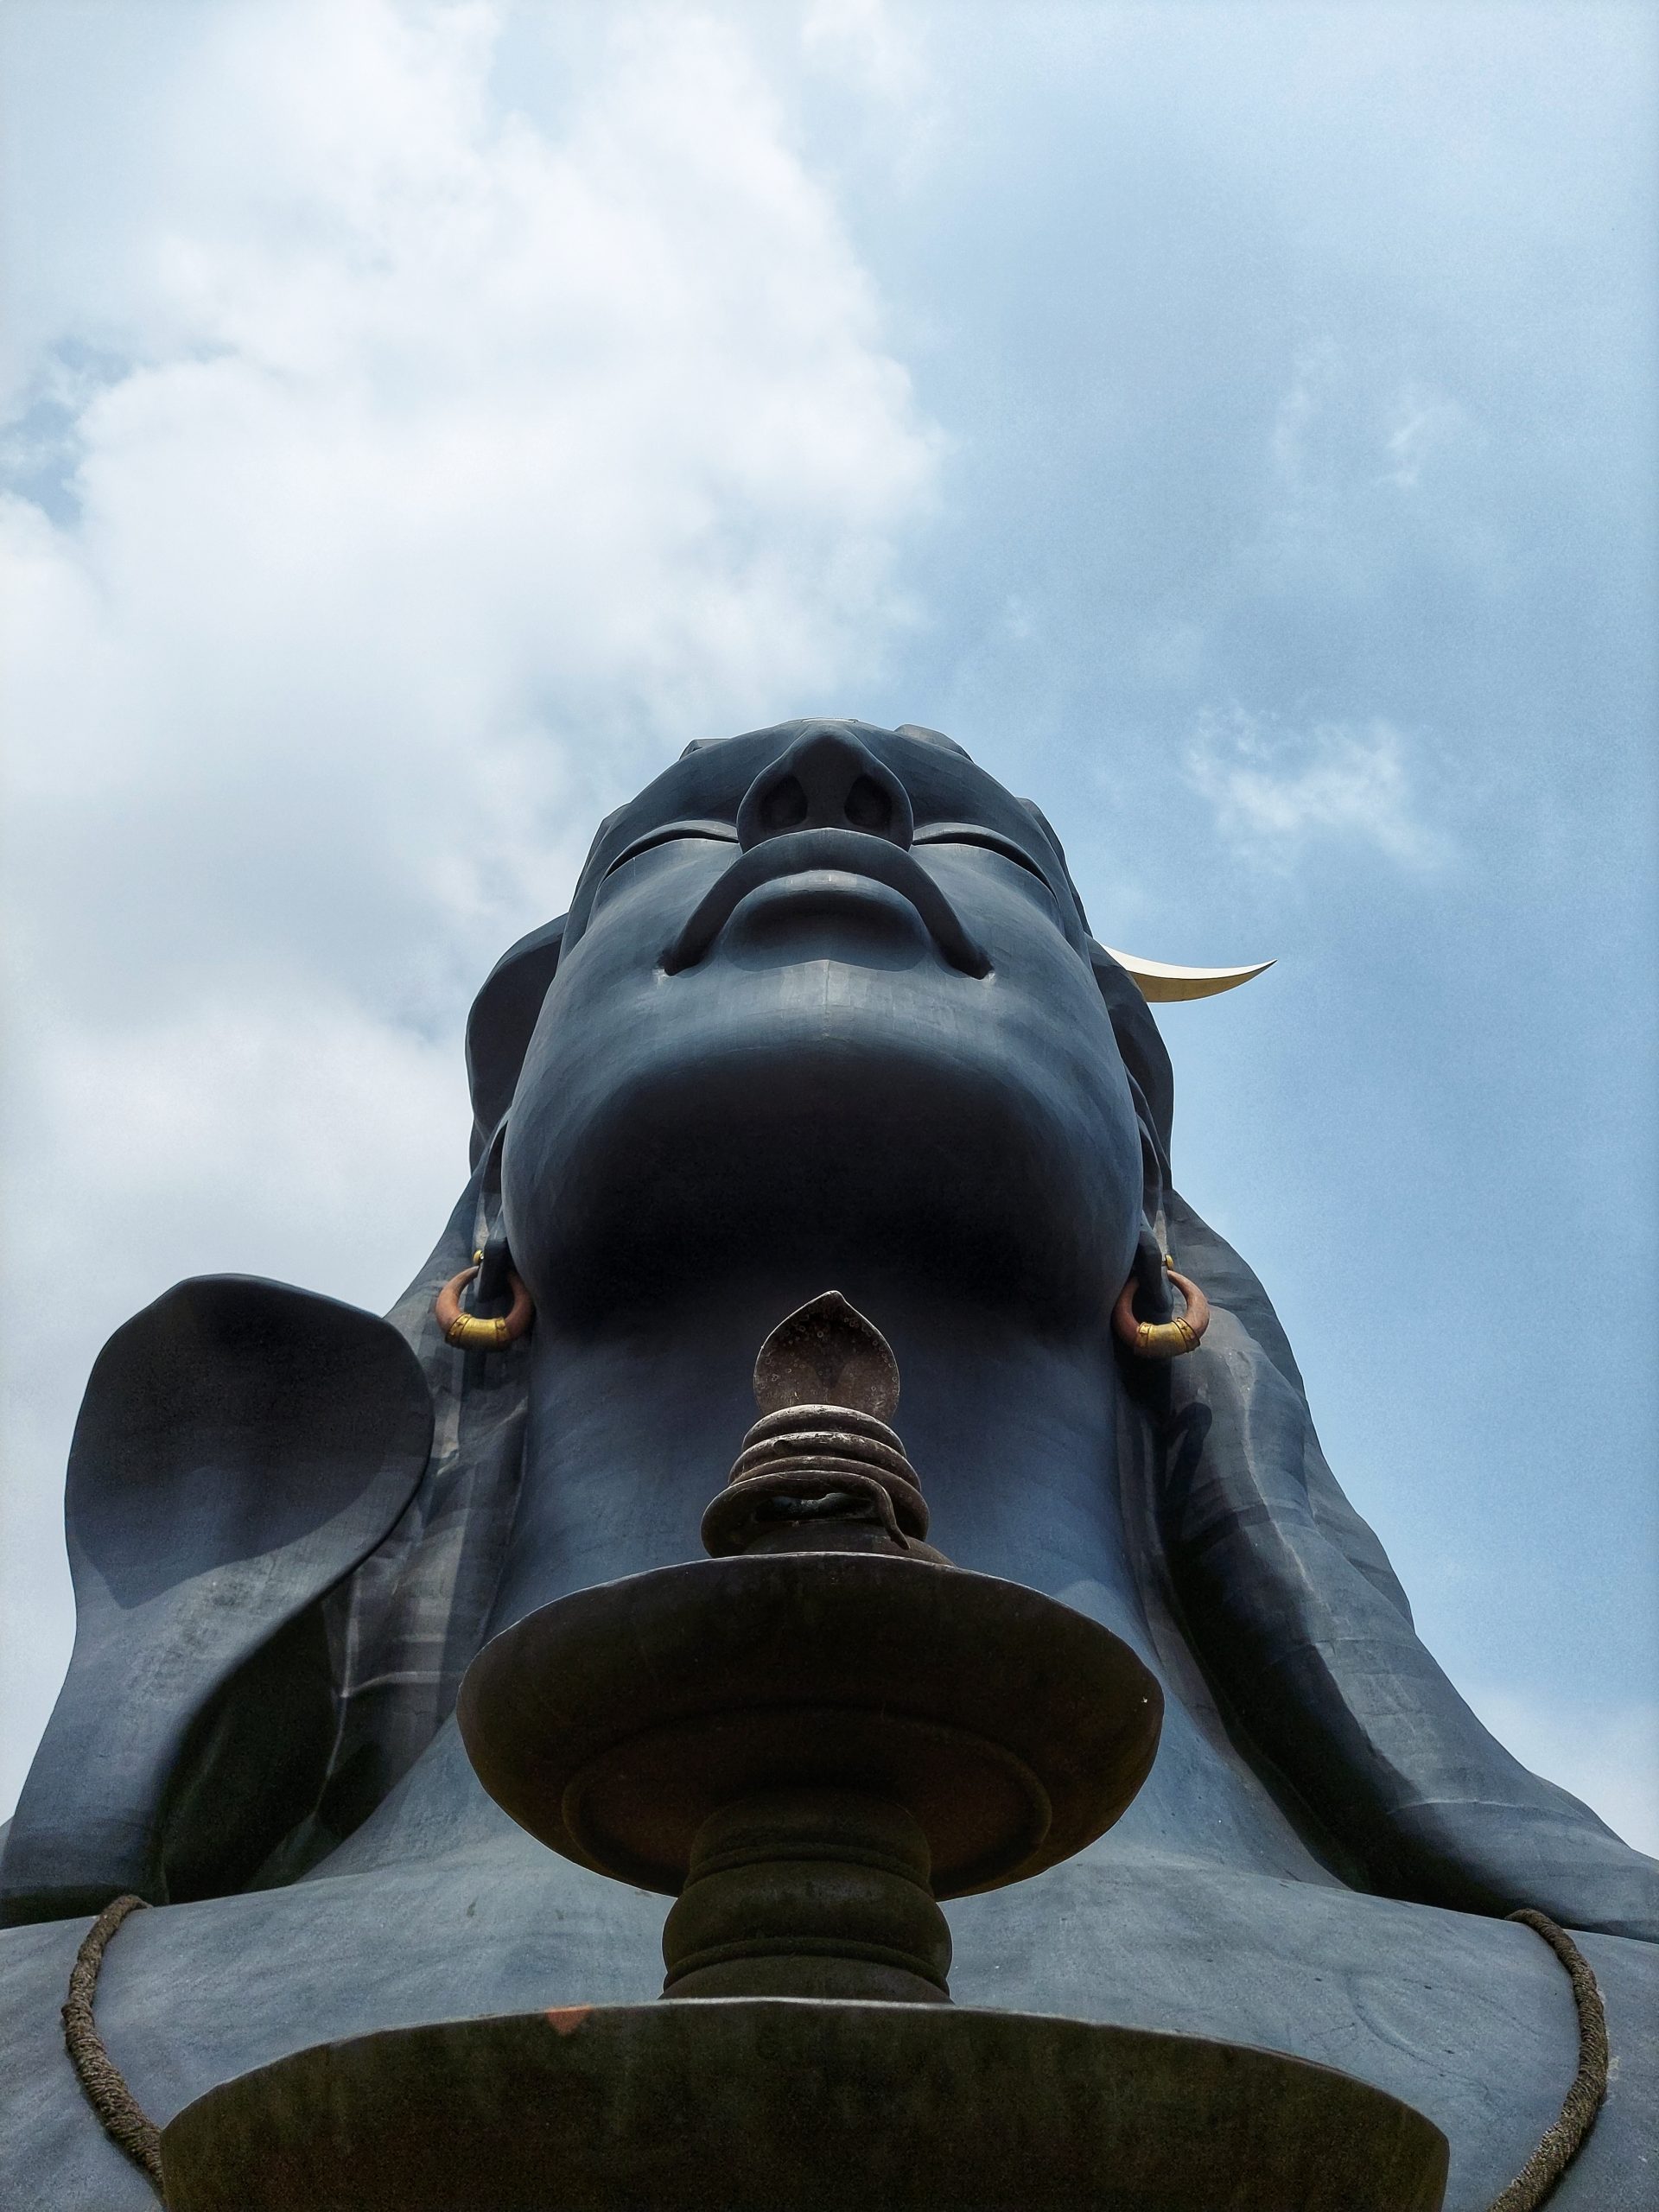 Lord Shiva statue Coimbatore, Tamil Nadu